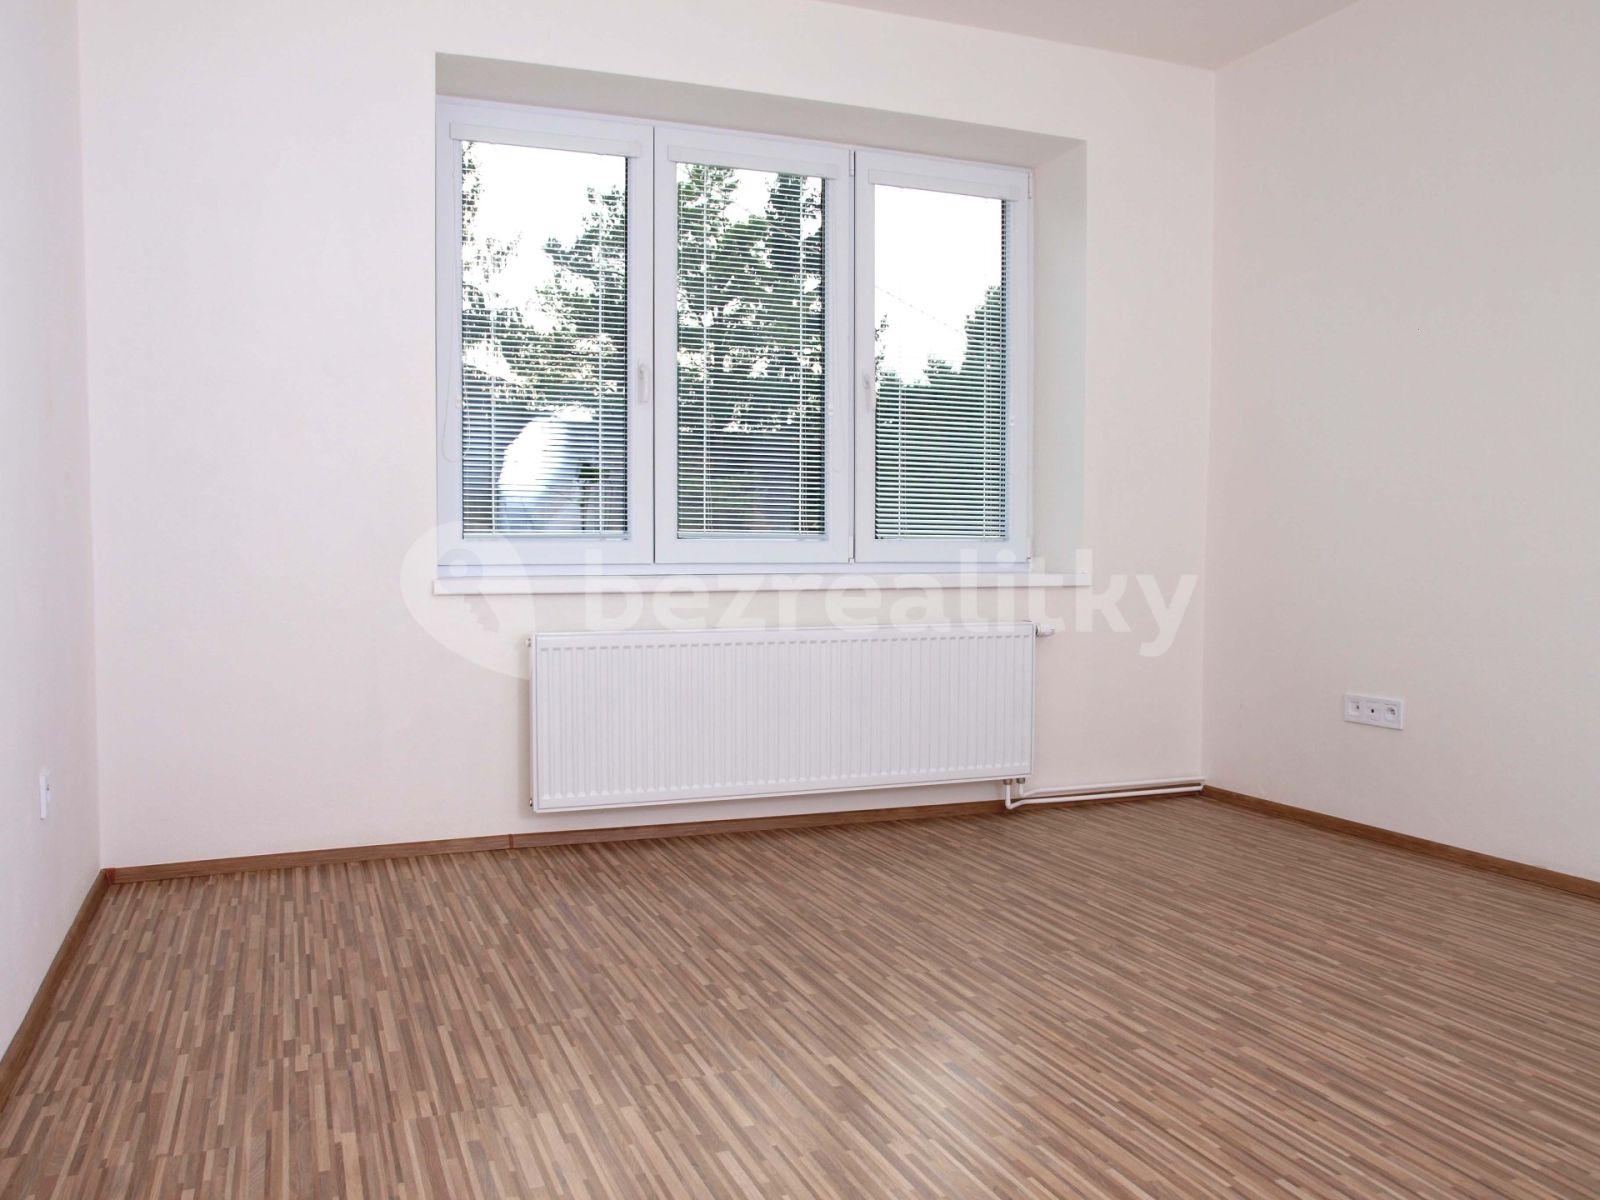 2 bedroom flat to rent, 60 m², Karla Hynka Máchy, Moravský Krumlov, Jihomoravský Region